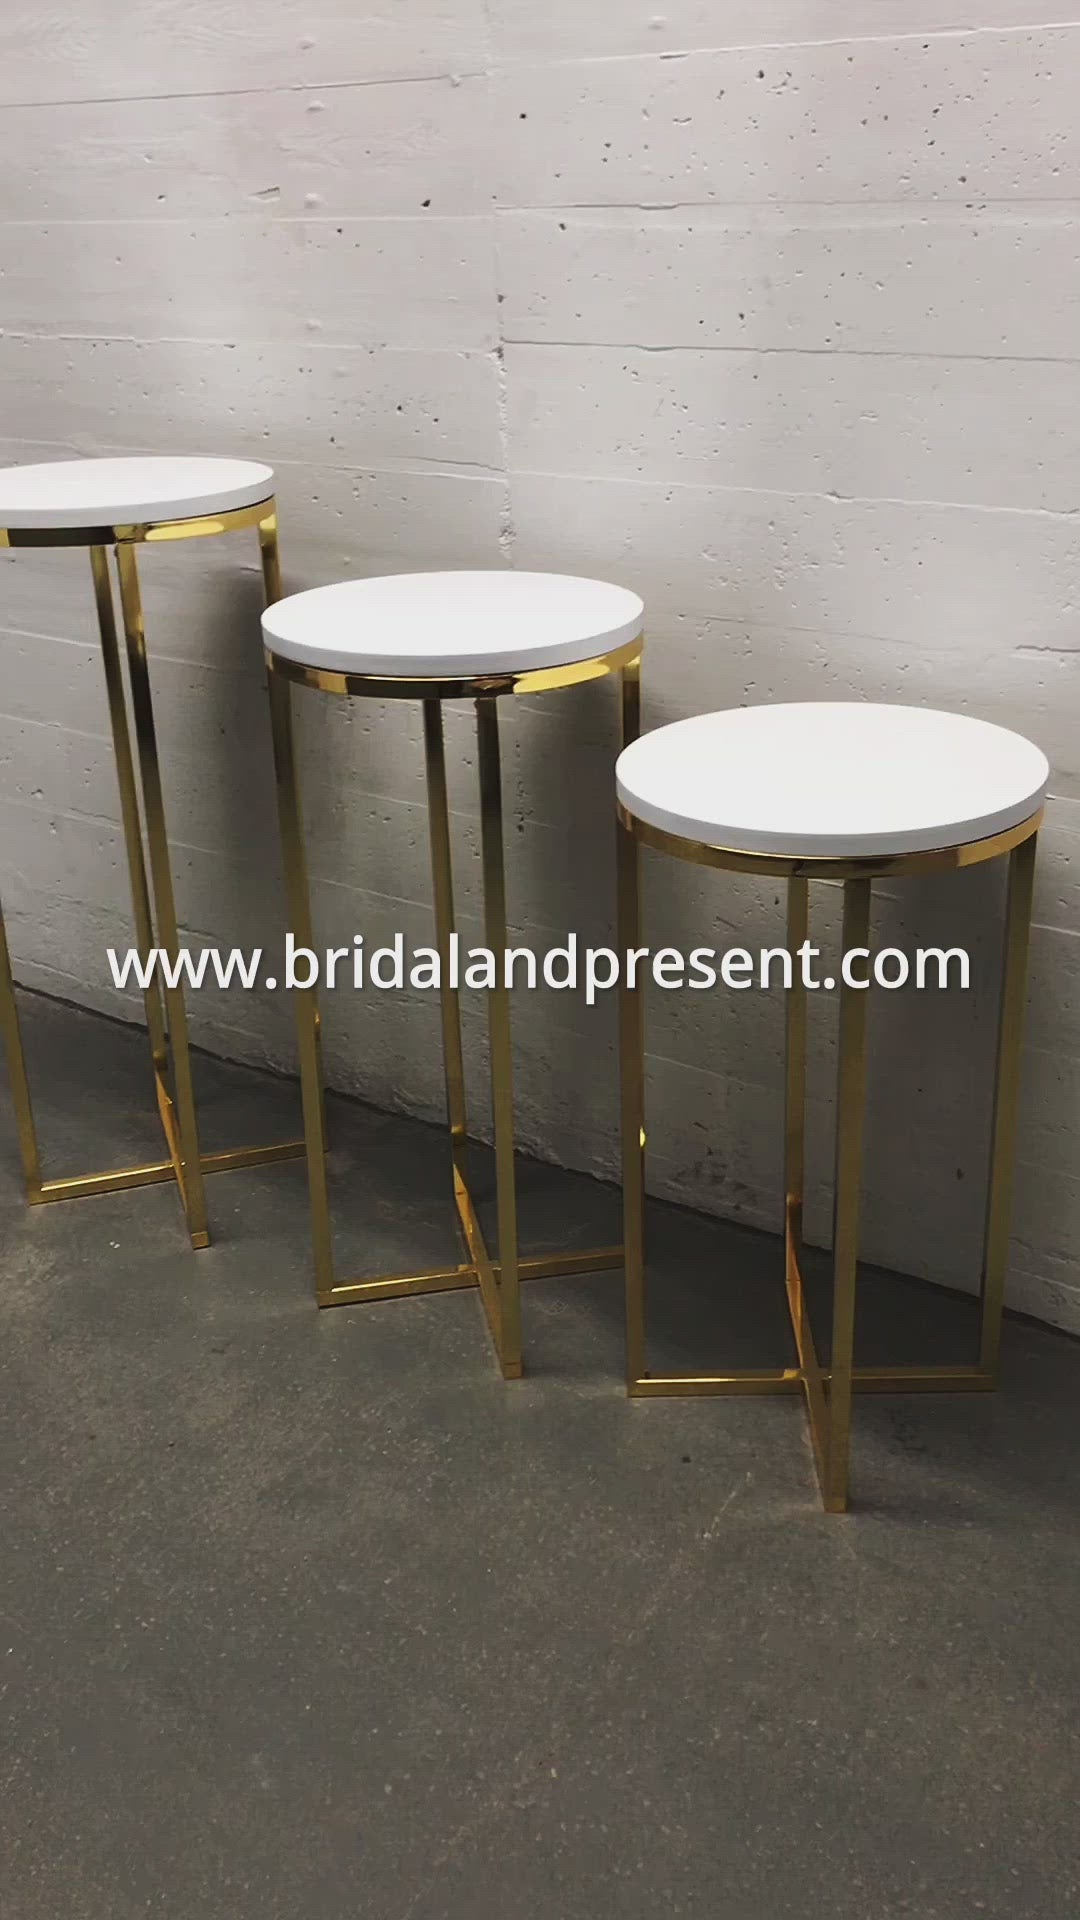 Set of 3 PCs Plinths - Gold Round Metal Plinths Wedding Backdrop Stand Columns Cylinders Baby shower Party metal dessert table pillar